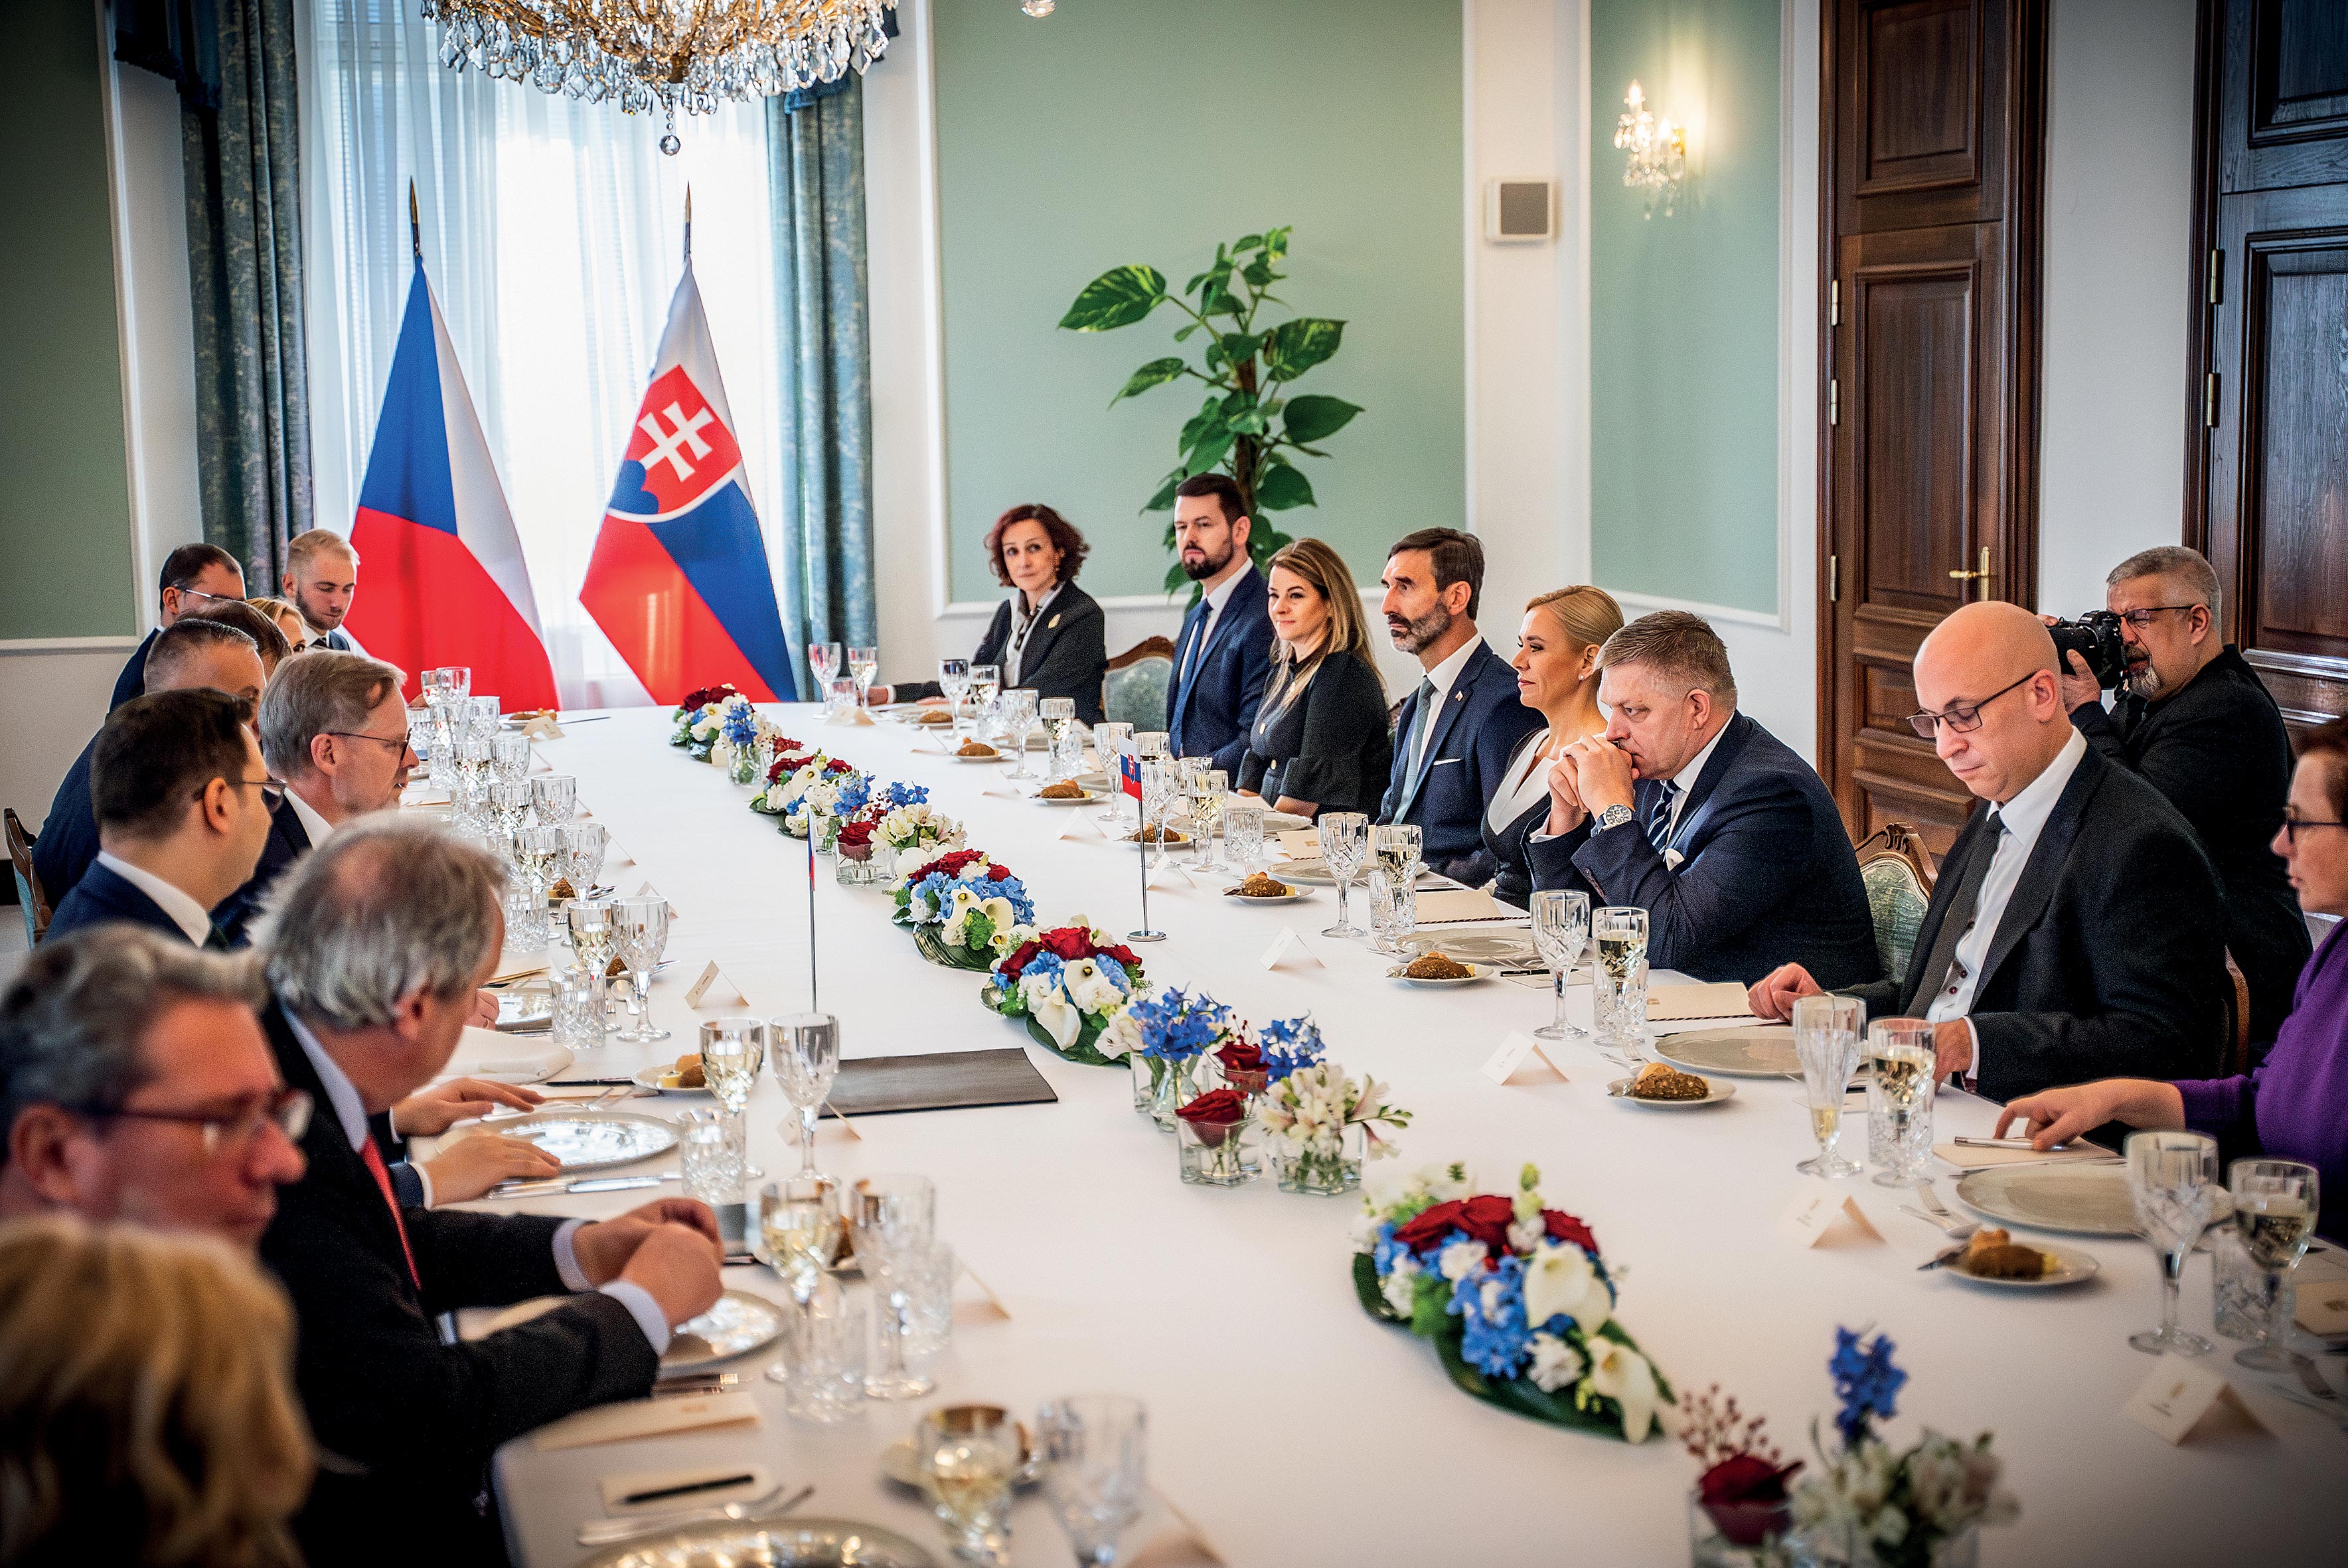 Slovak politicians in Prague